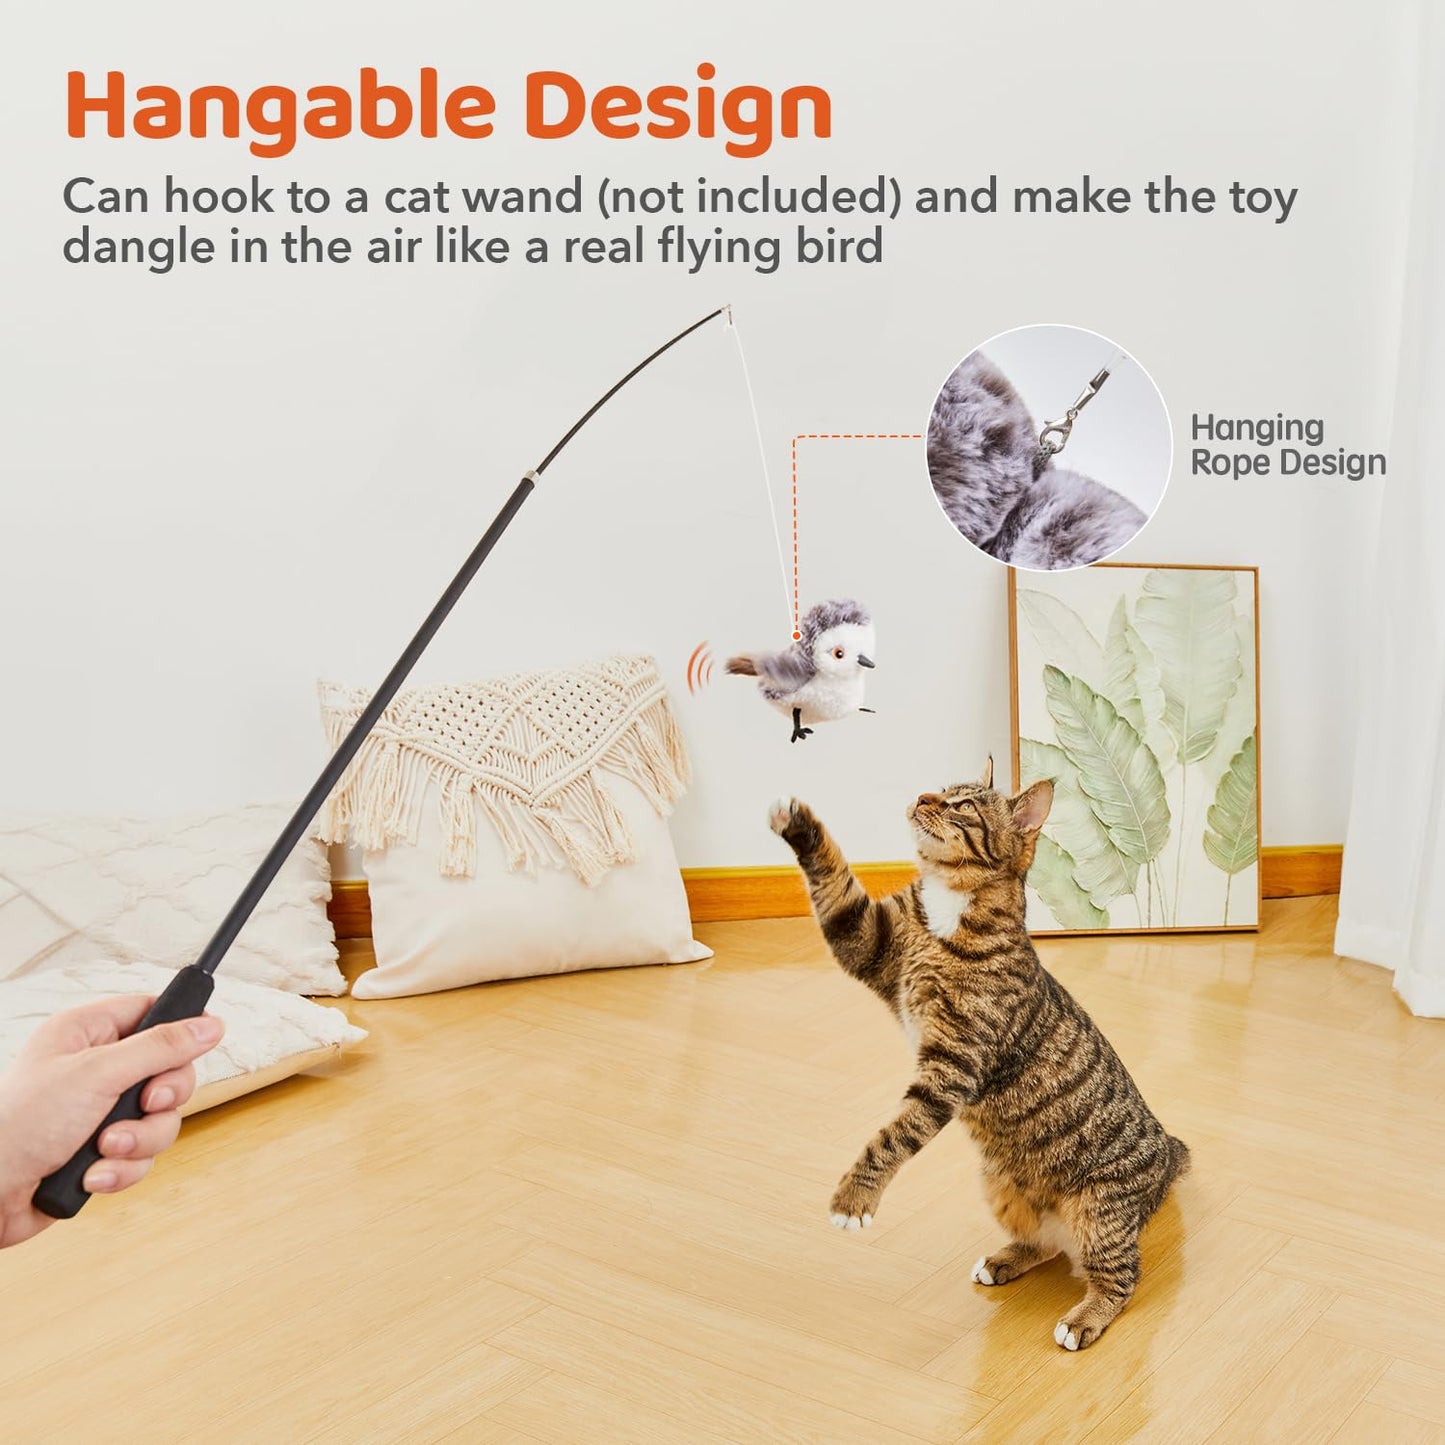 Potaroma Cat Toys Flapping Bird (No Flying), Lifelike Sandpiper Chirp Tweet